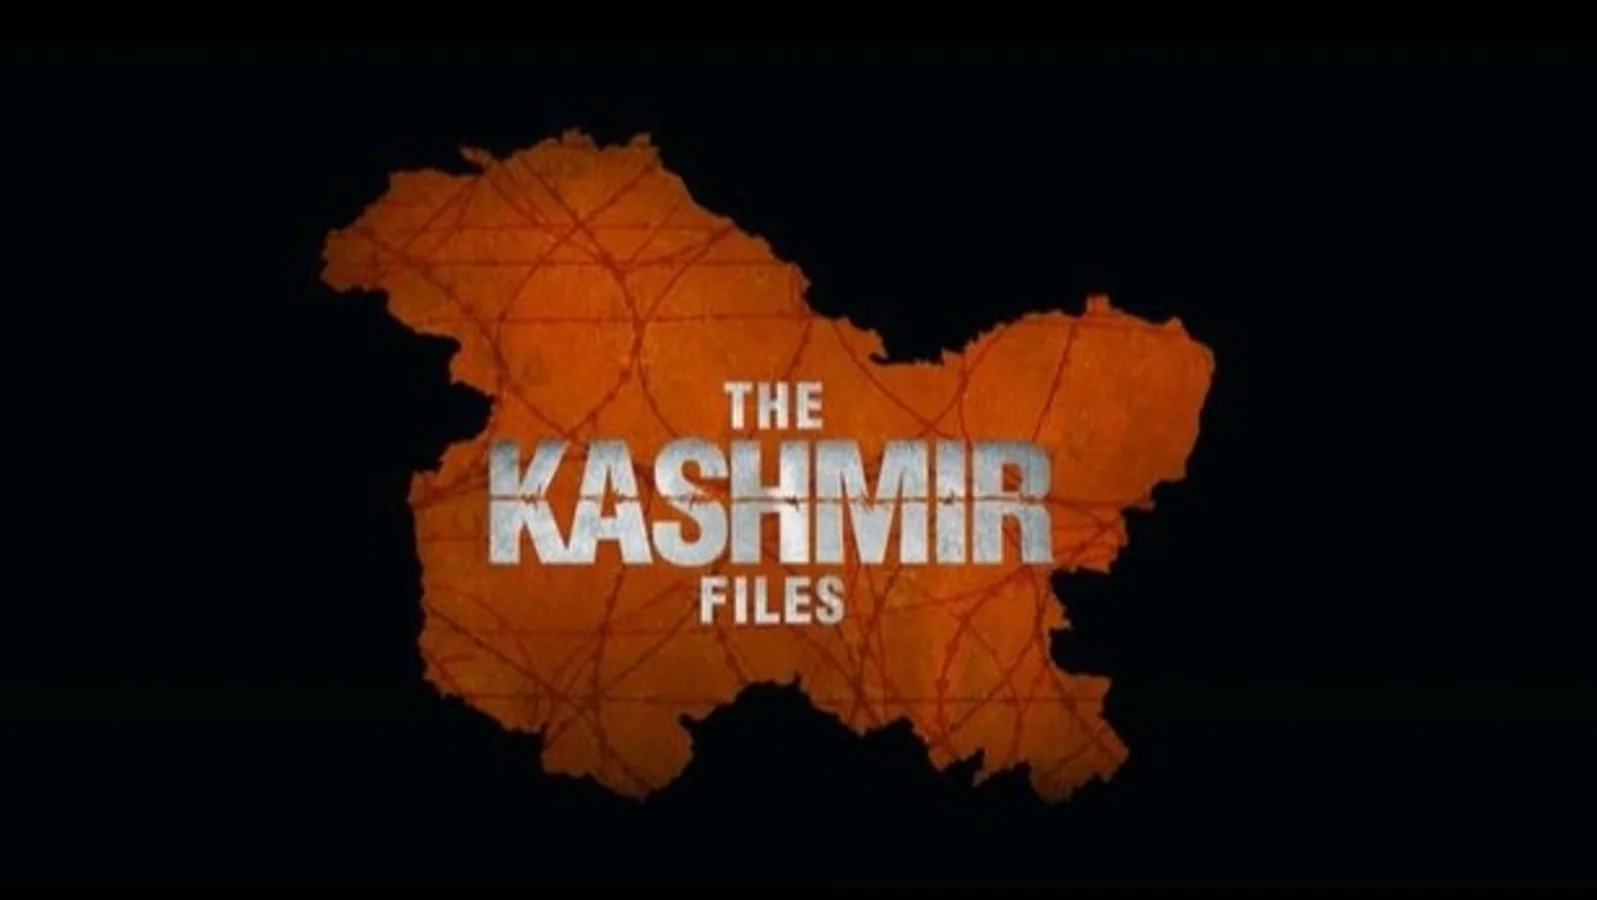 'What were BJP's 85 MPs doing': Congress attacks PM Modi over Kashmir Files